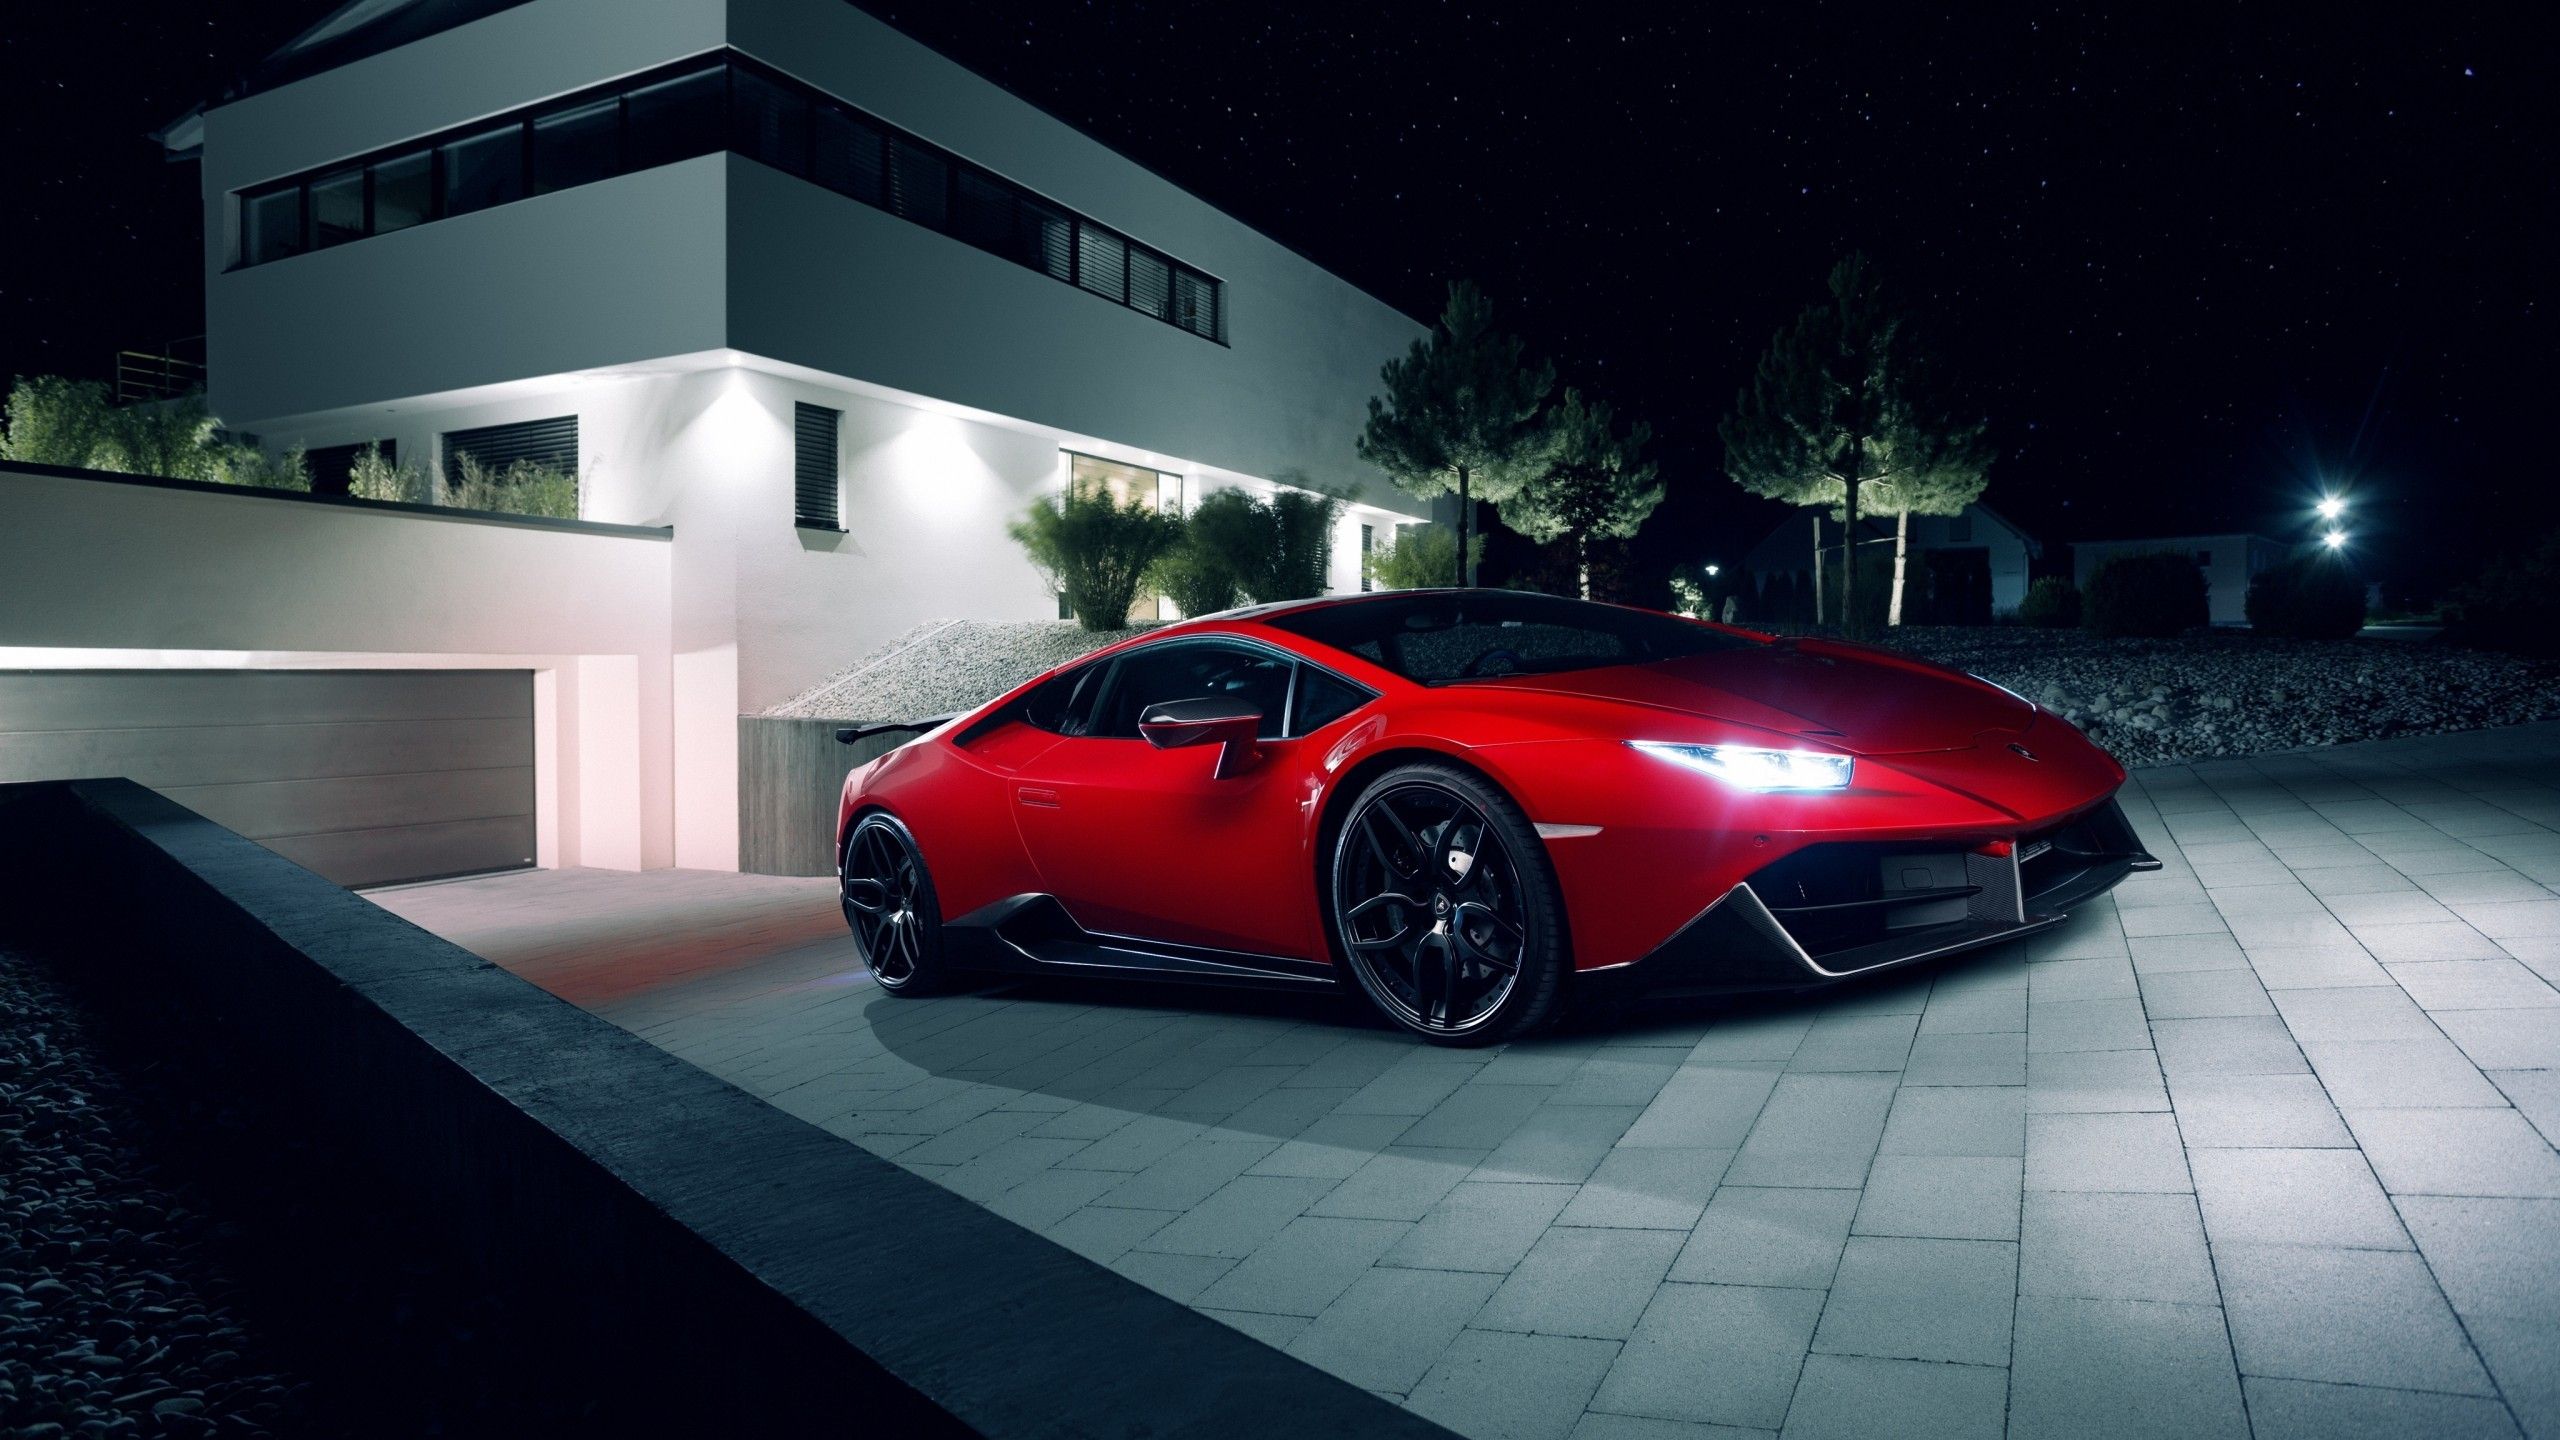 Download 2560x1440 Lamborghini Huracan, Red, Night, Supercar, Cars, House, Stars Wallpaper for iMac 27 inch